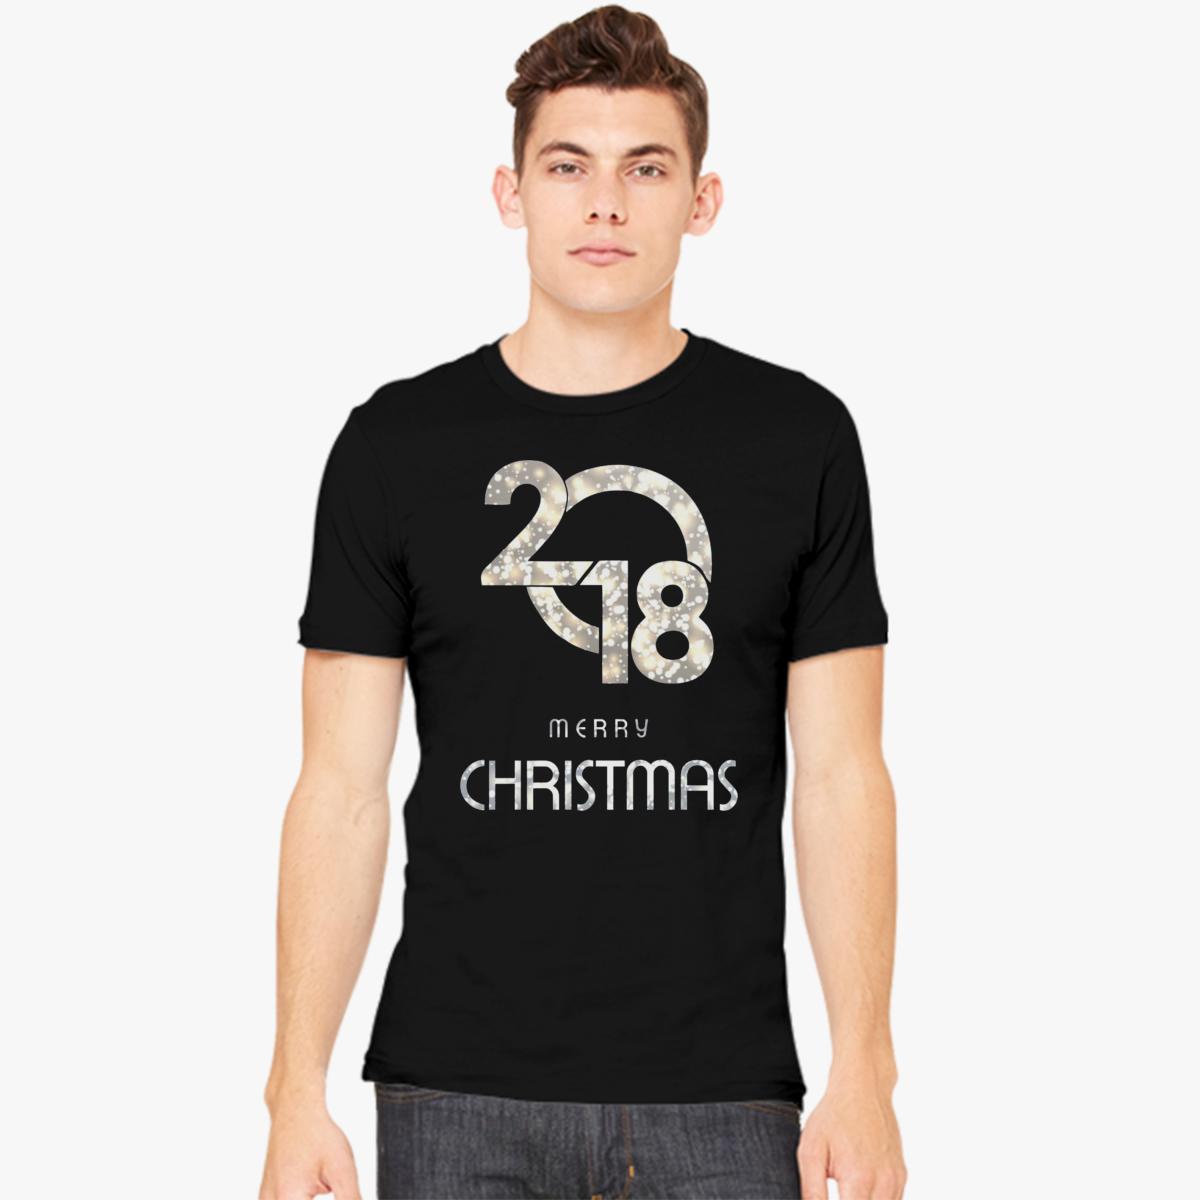 Merry Christmas 2018 Men's T-shirt